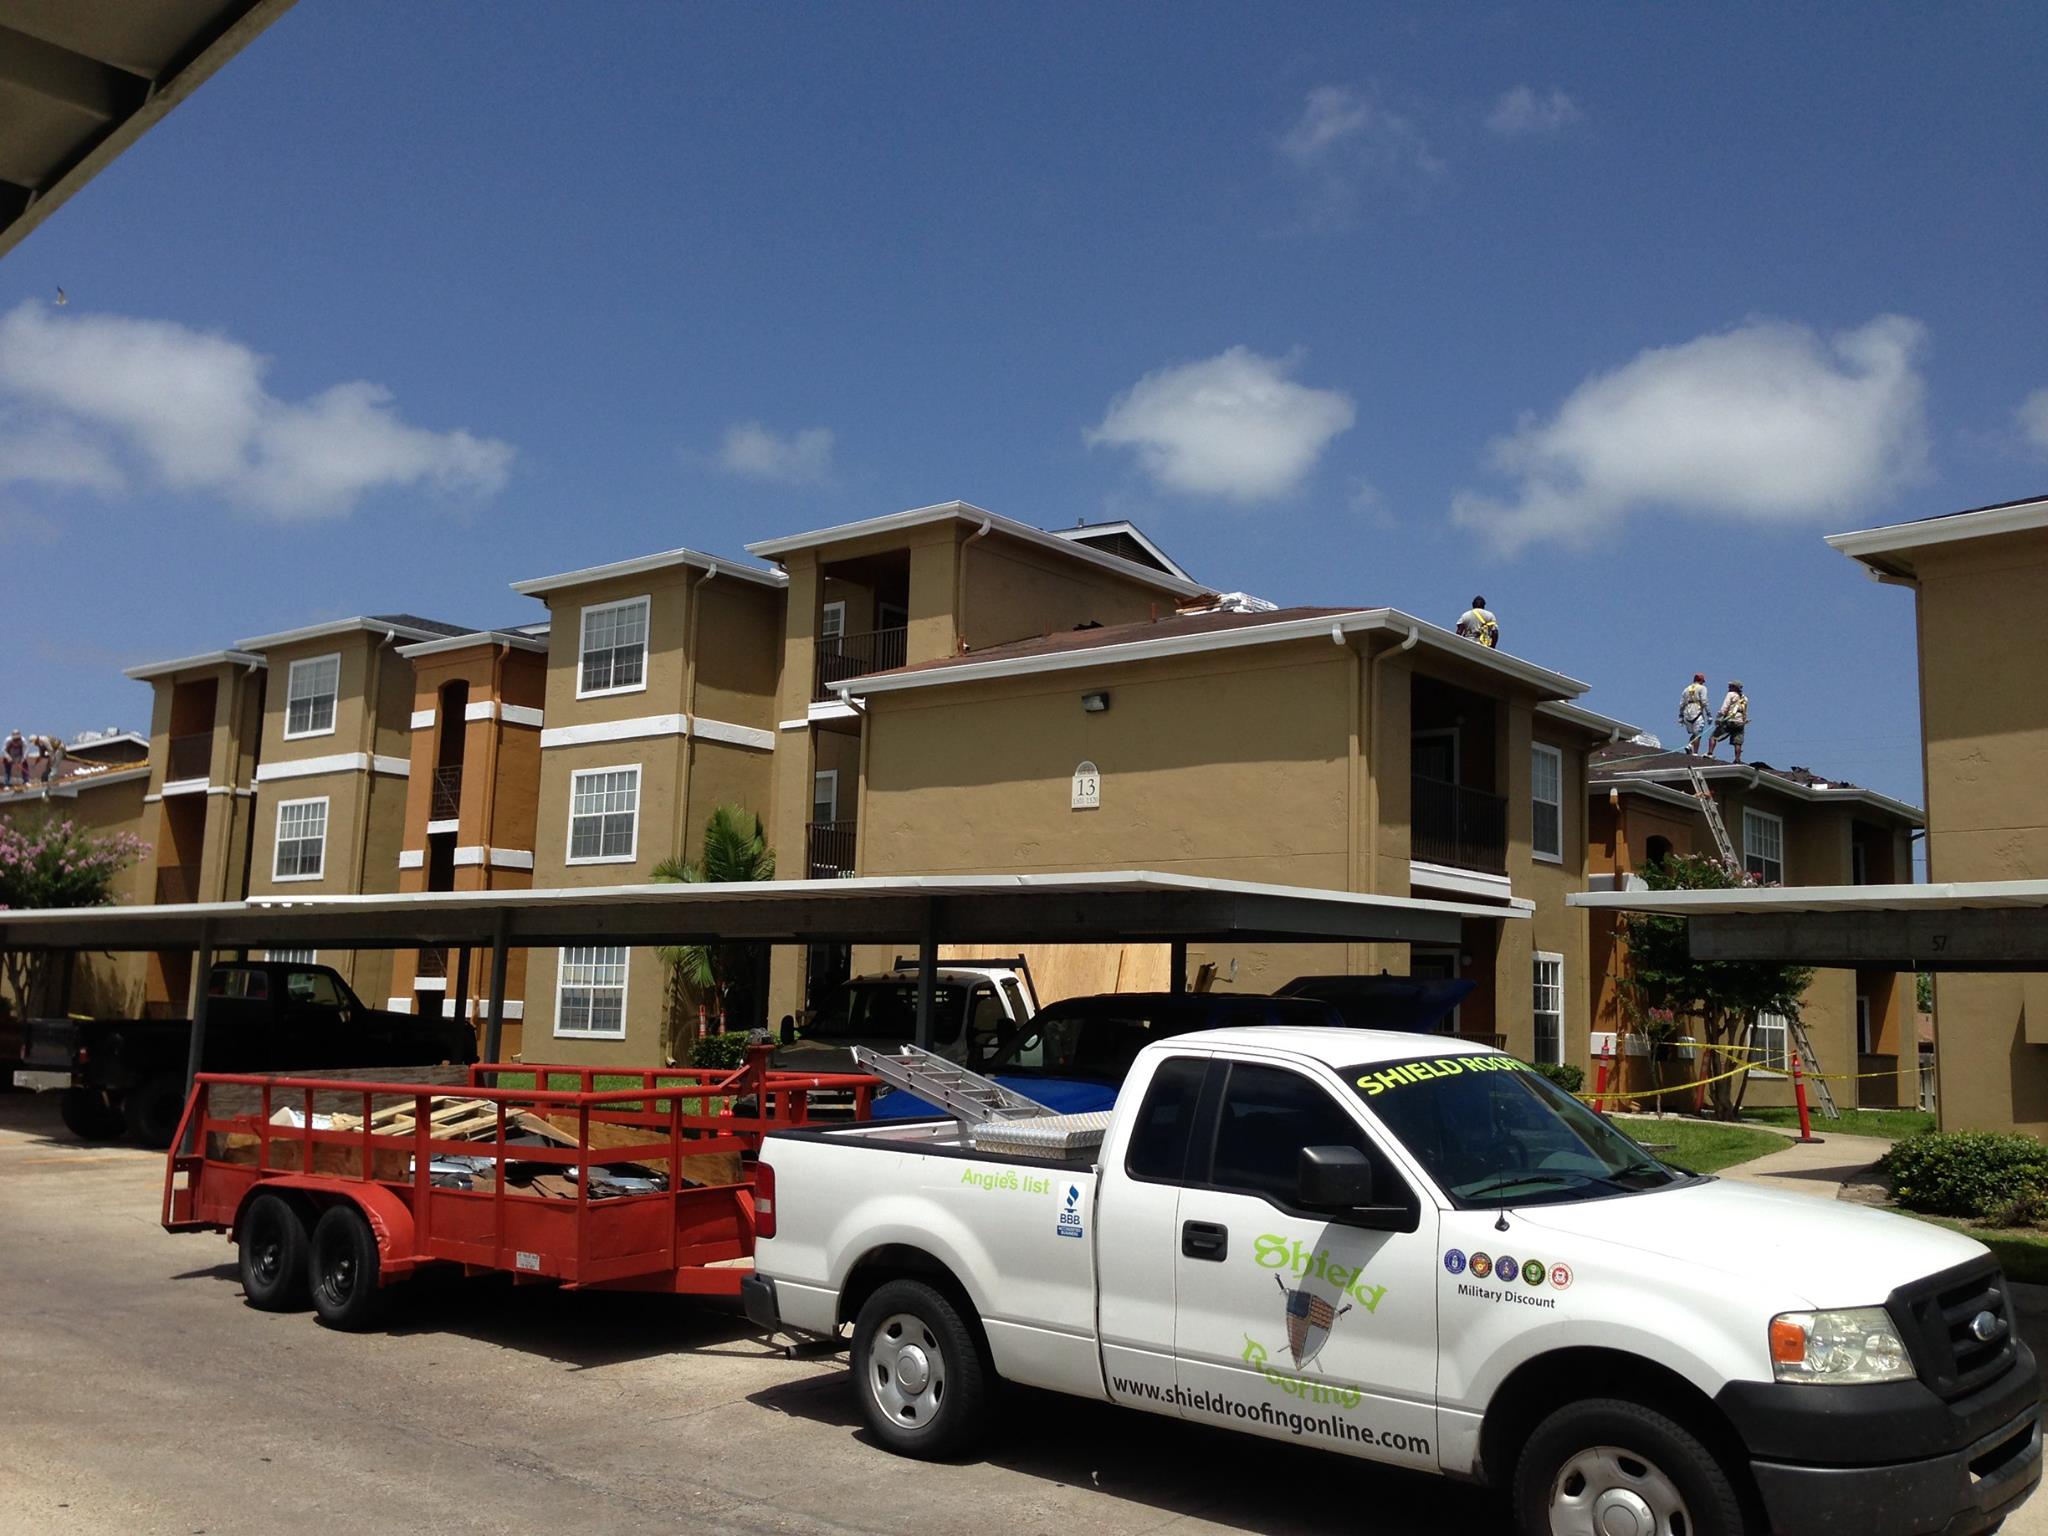   Roofing Company San Antonio         